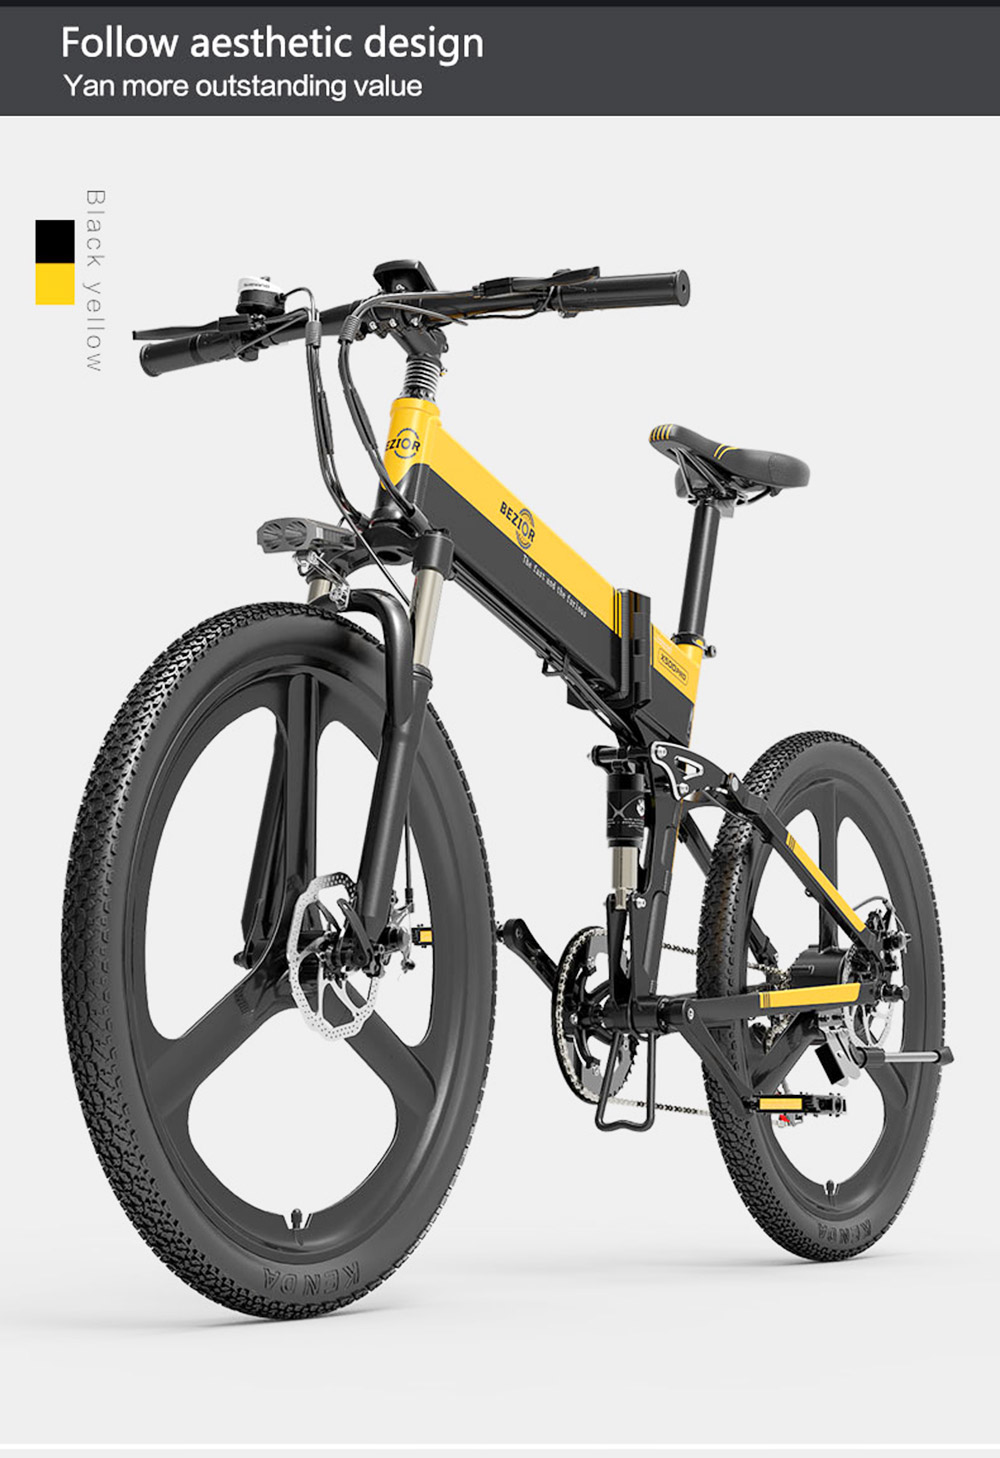 BEZIOR X500 PRO Electric Mountain Folding Bike 500W Motor 10.4Ah Removable Battery 30km/h Max Speed - Black & Yellow